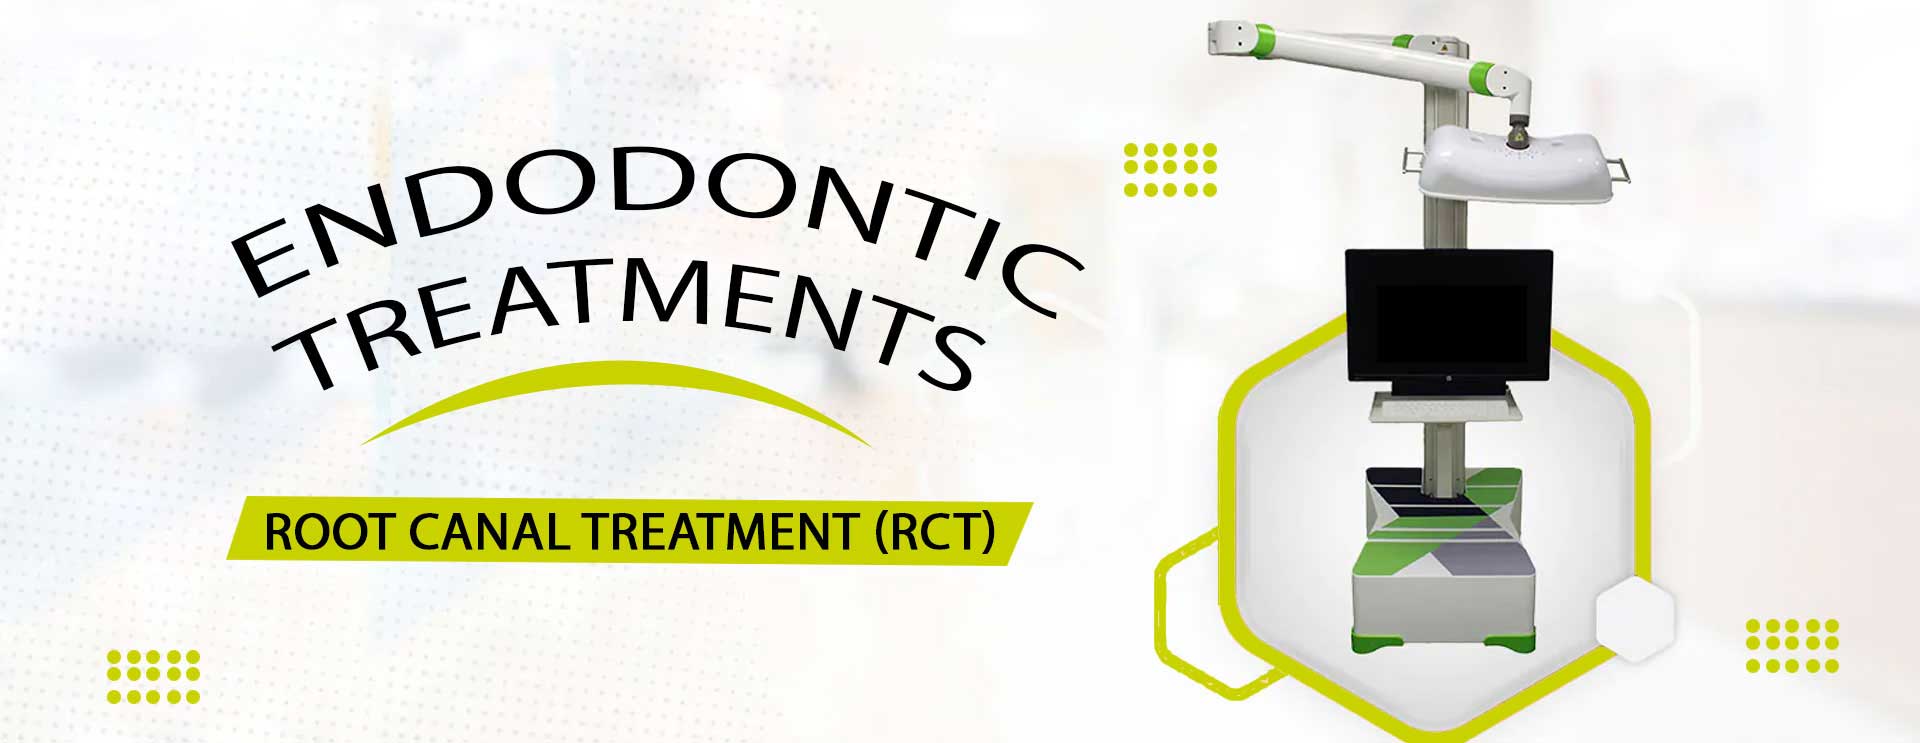 Endodontic Treatments in Bhatena